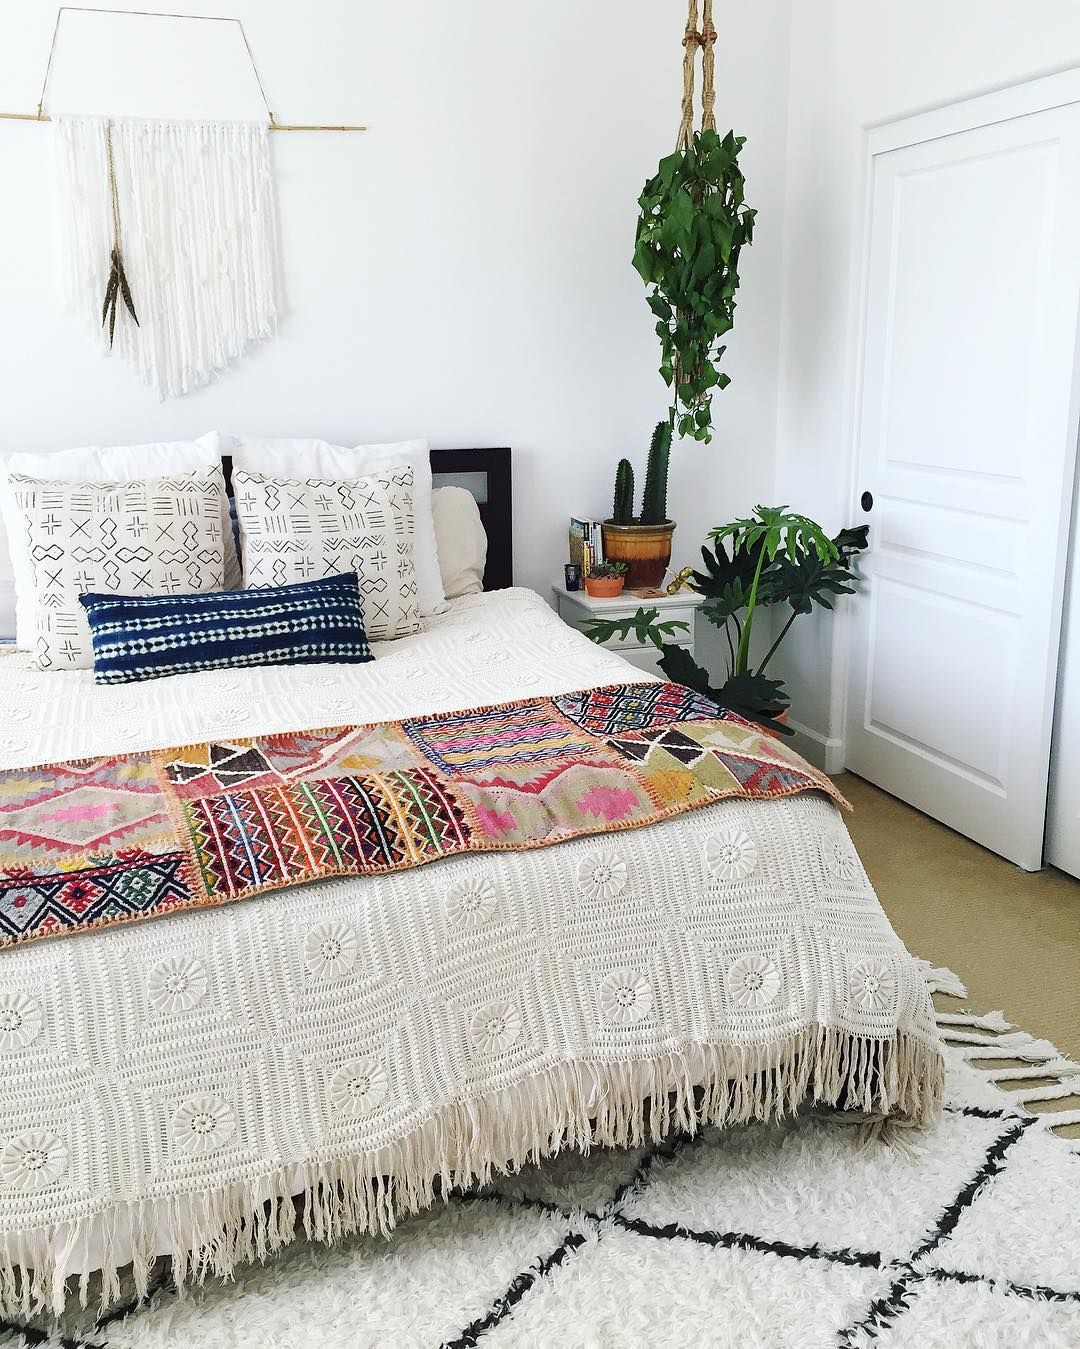 15 Bohemian Bedrooms With Free Spirit Vibes - Boho Bedroom Decor Ideas